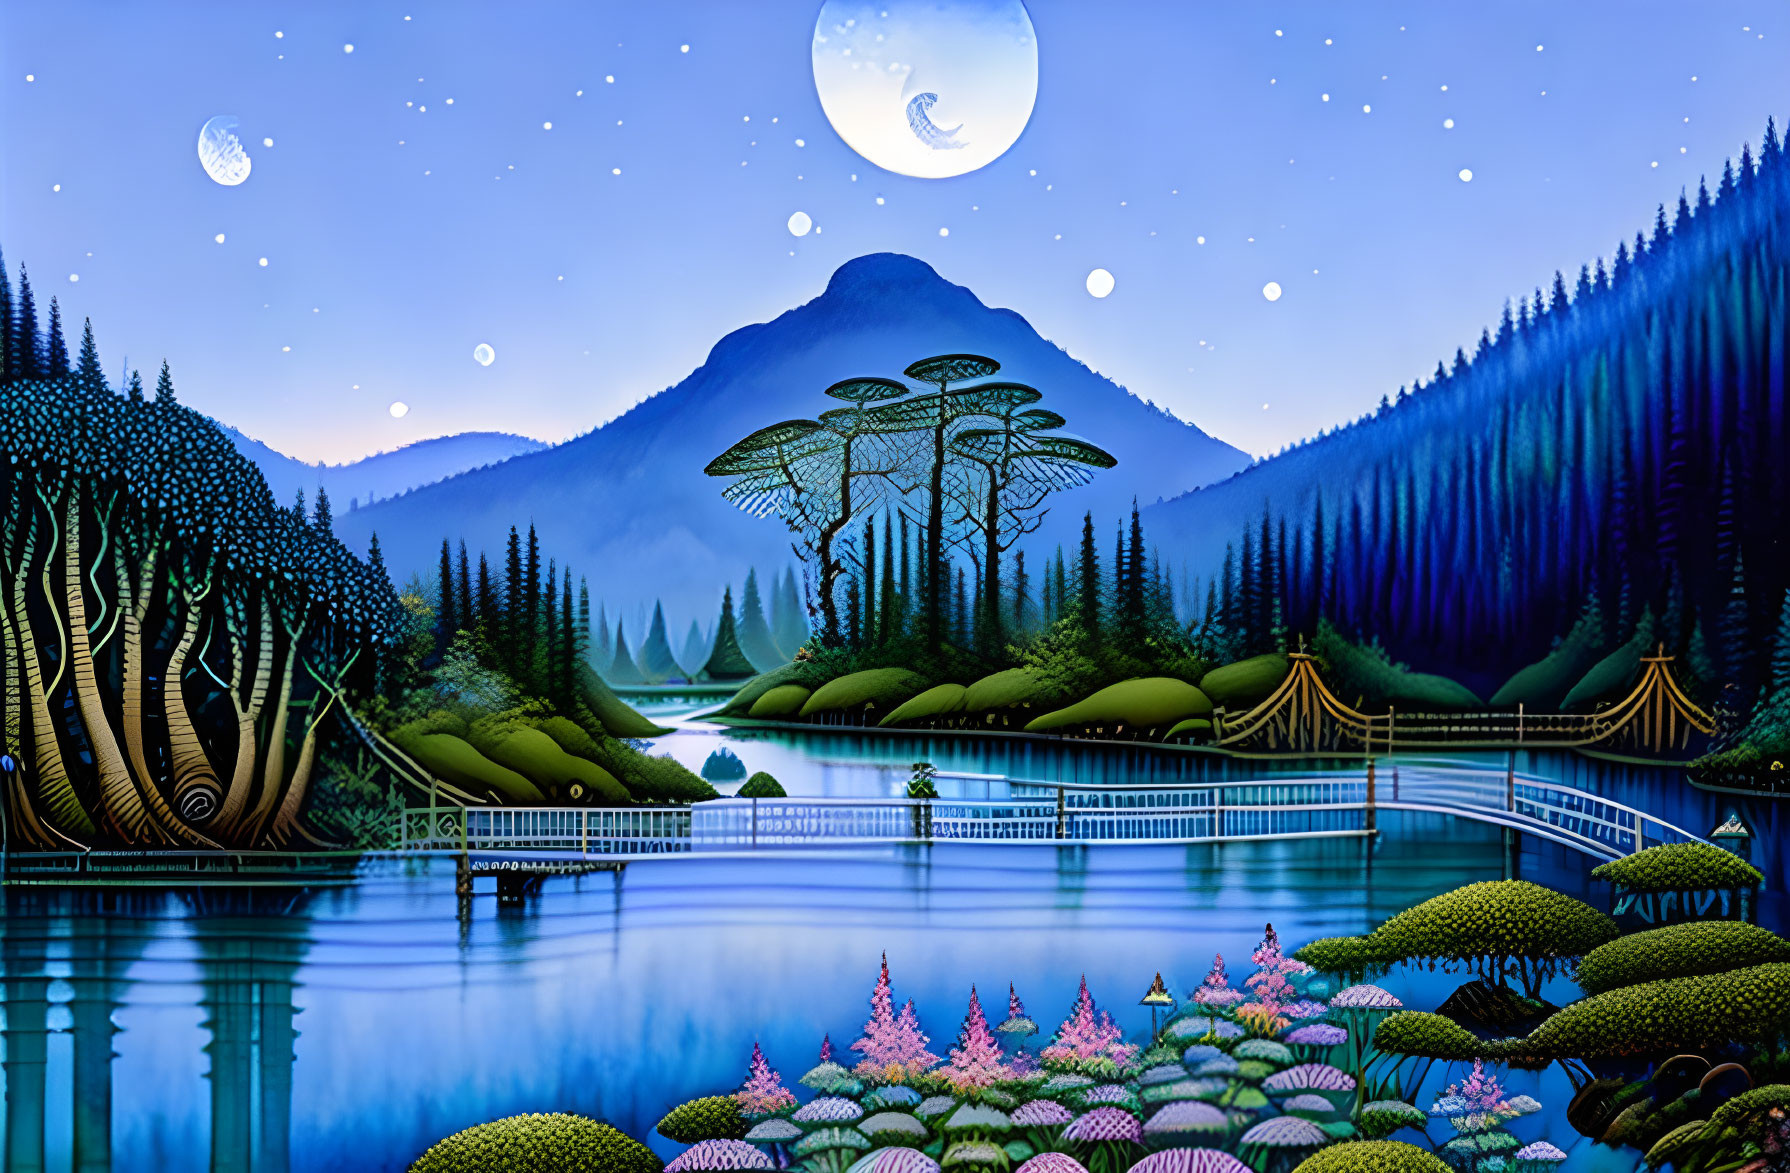 Moonlit Fantasy Landscape with Lake, Footbridge, and Whimsical Trees